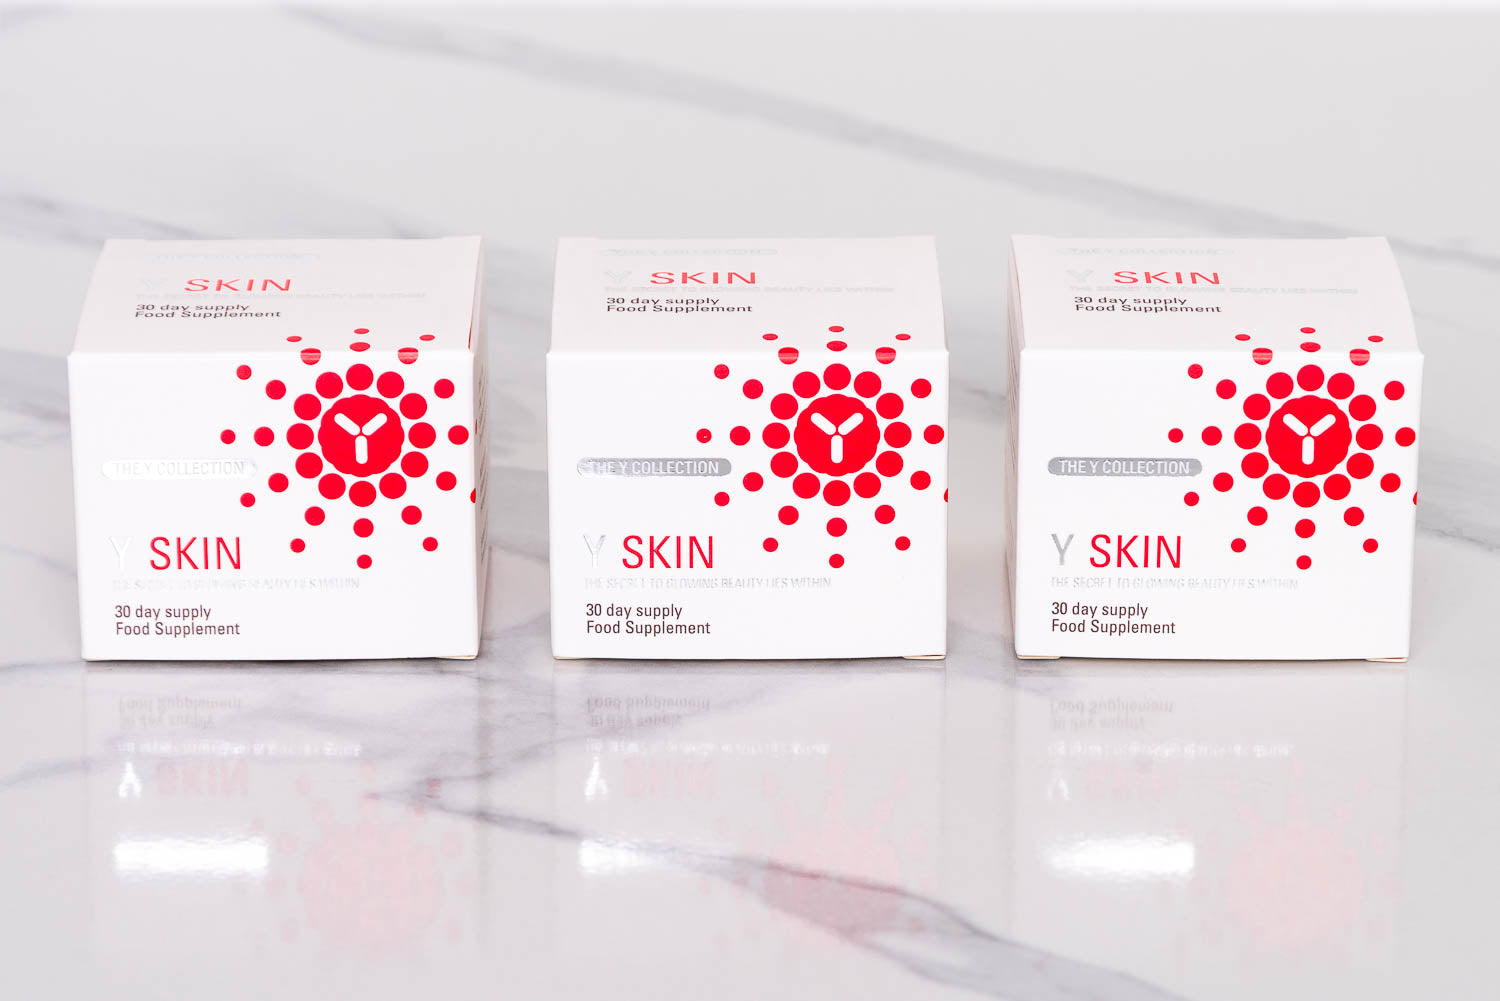 Y SKIN - anti ageing skin supplement